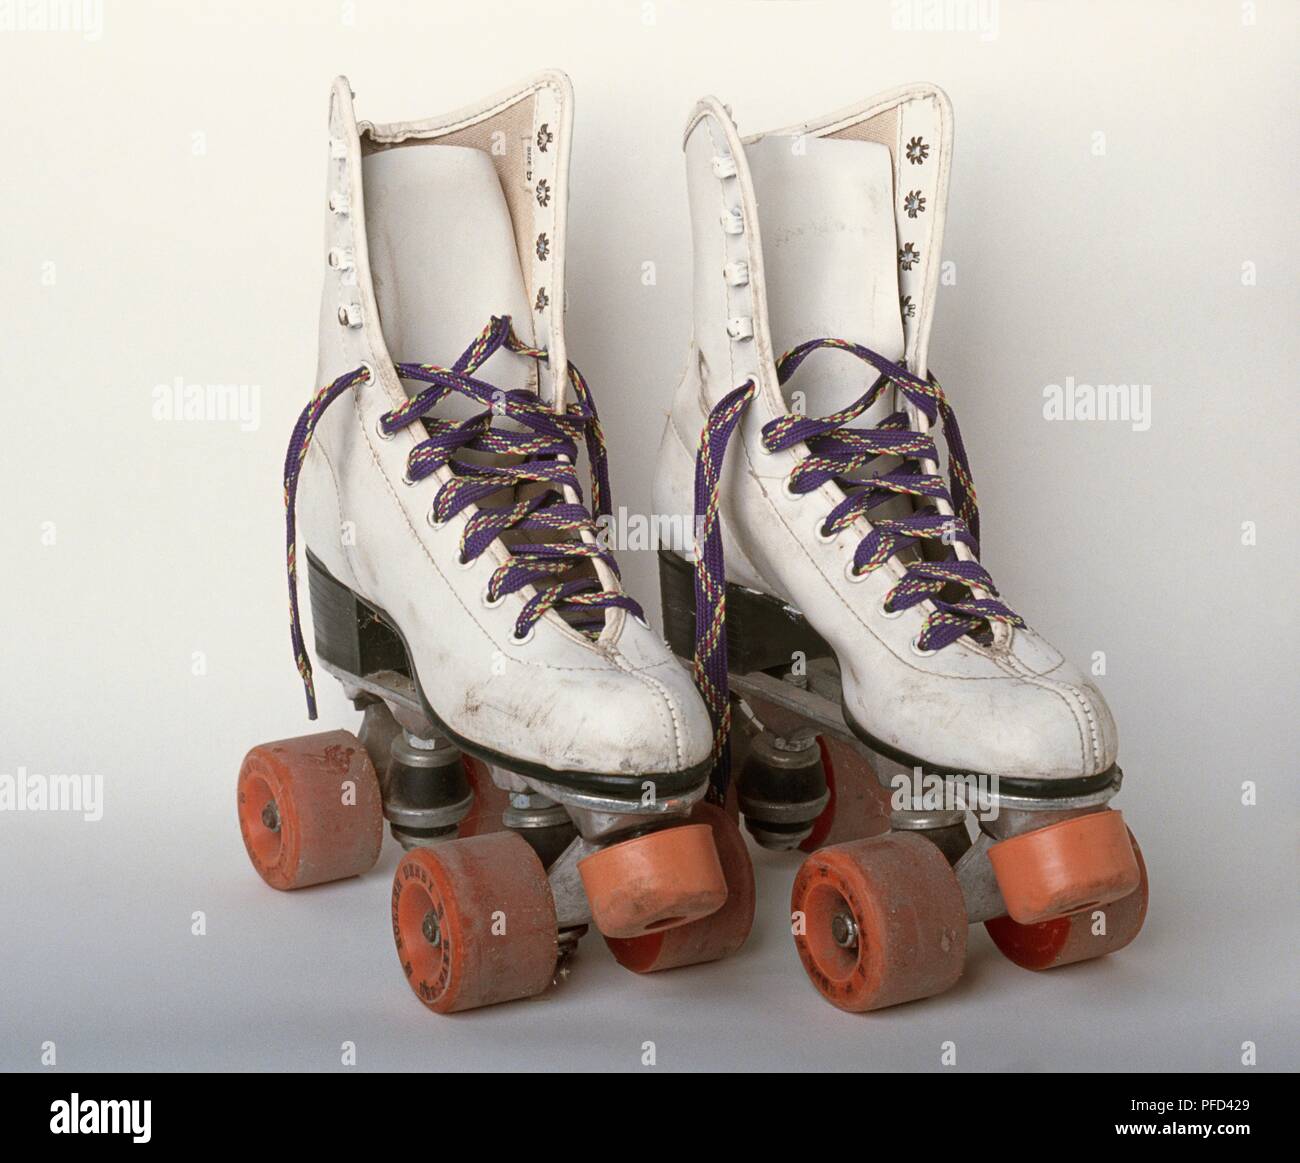 Pair of old, white roller skates Stock Photo - Alamy